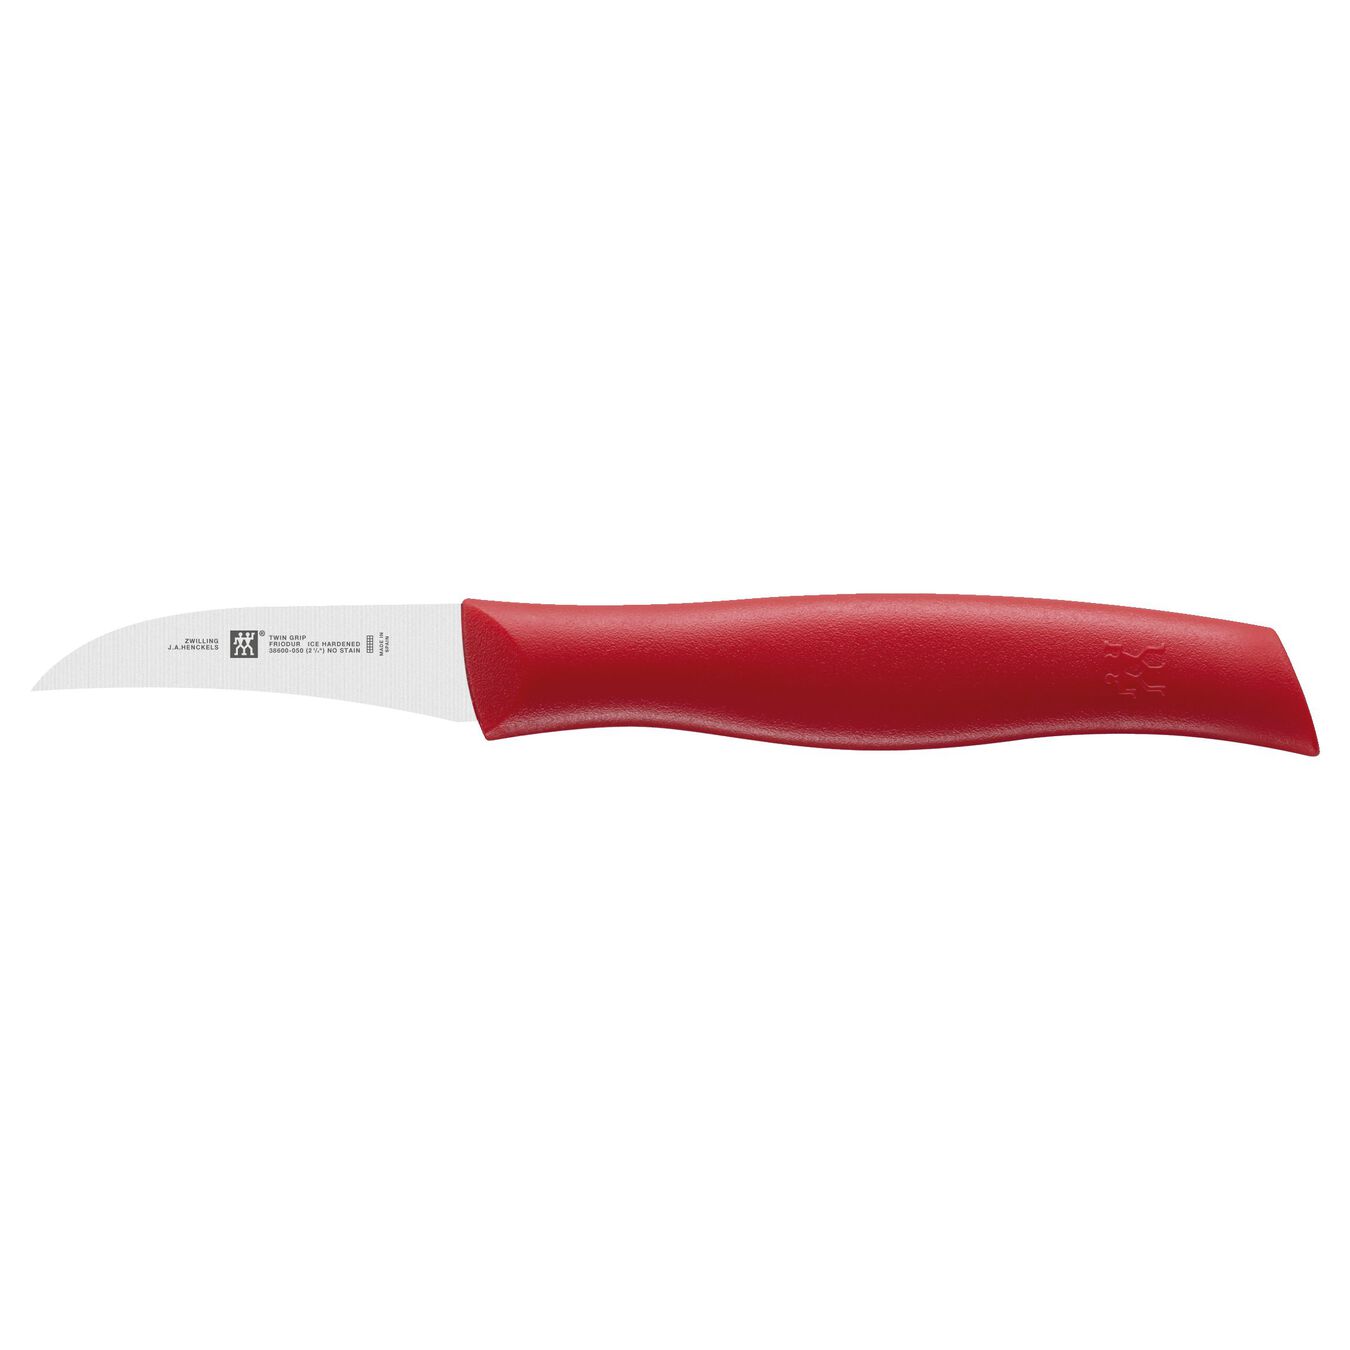 Pillekniv 5 cm, Red,,large 2